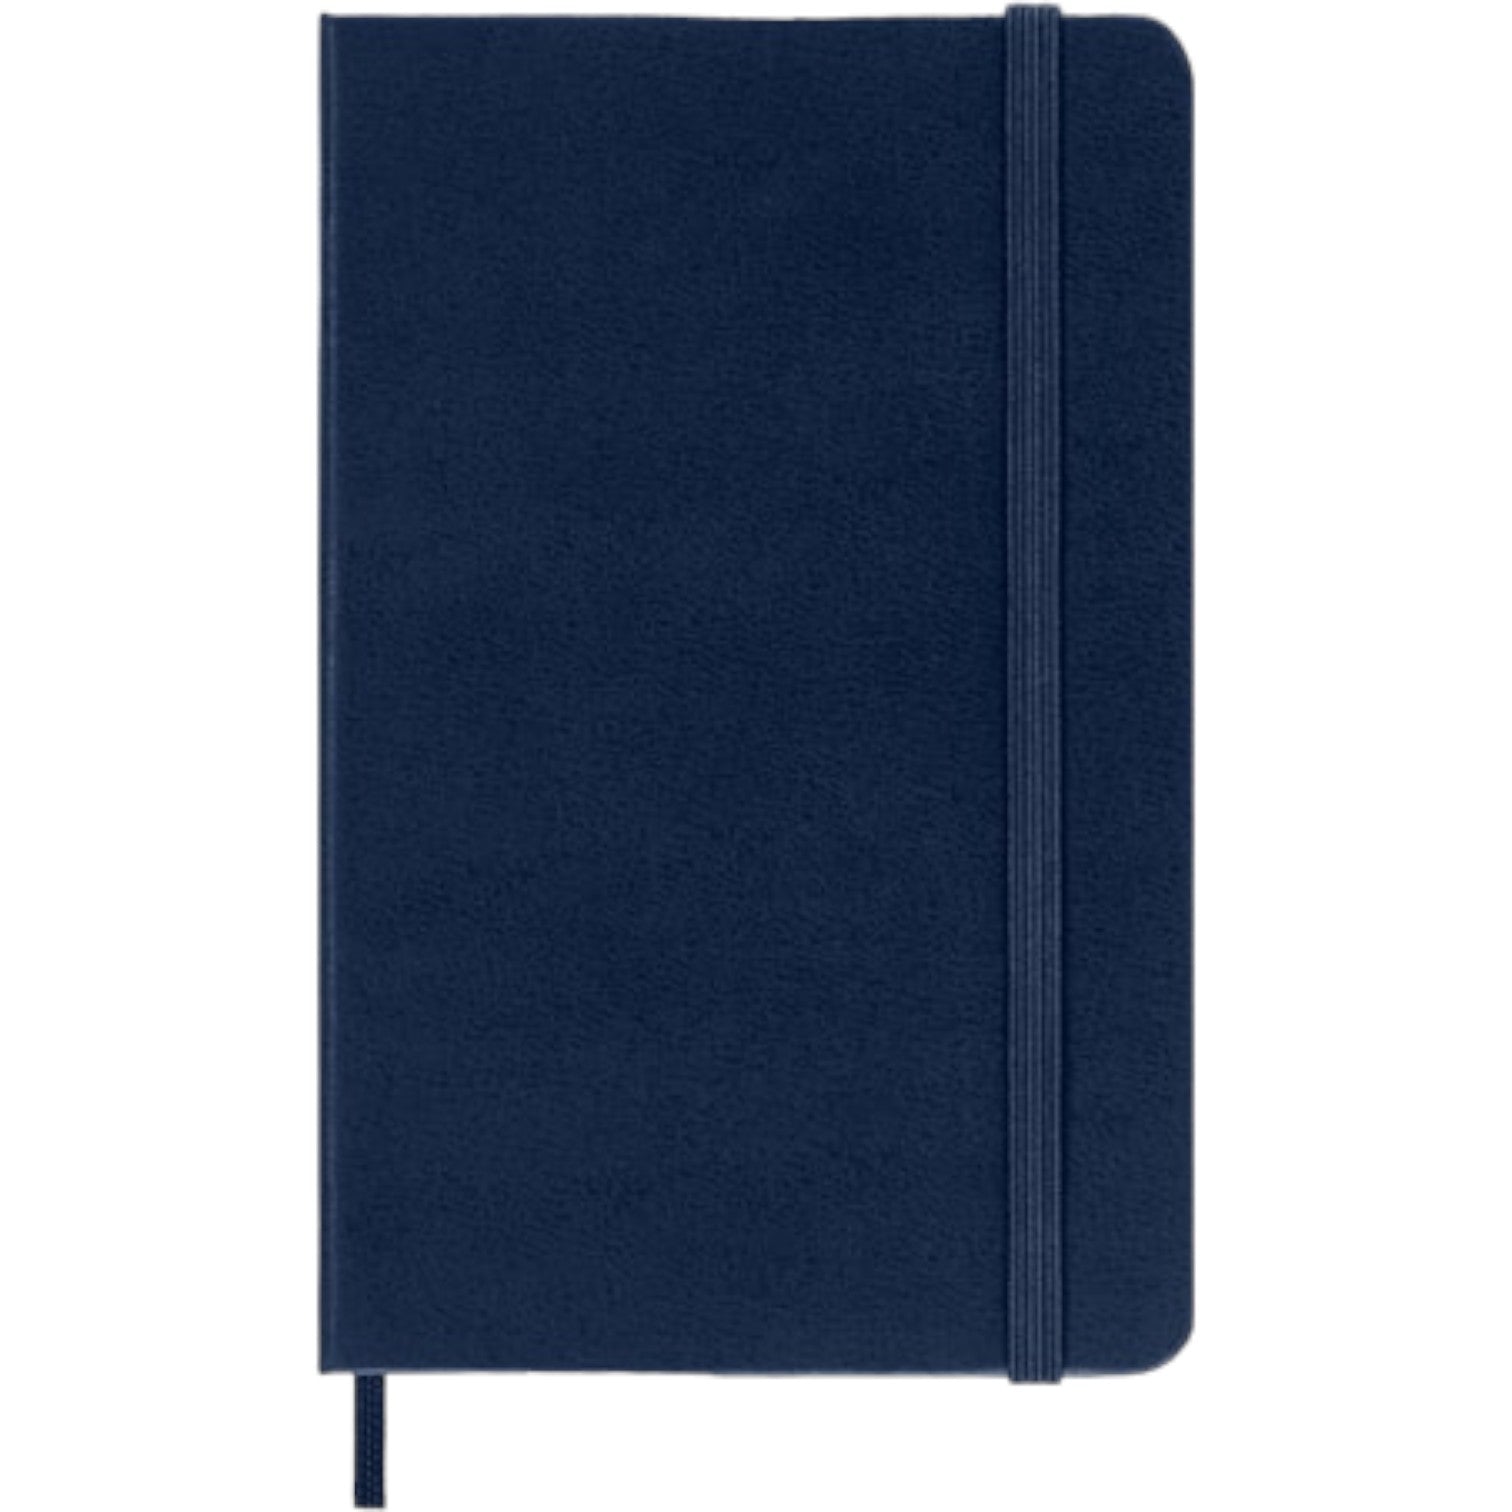 Pocket Notebook - Hard Cover - Ruled - Navy Blue